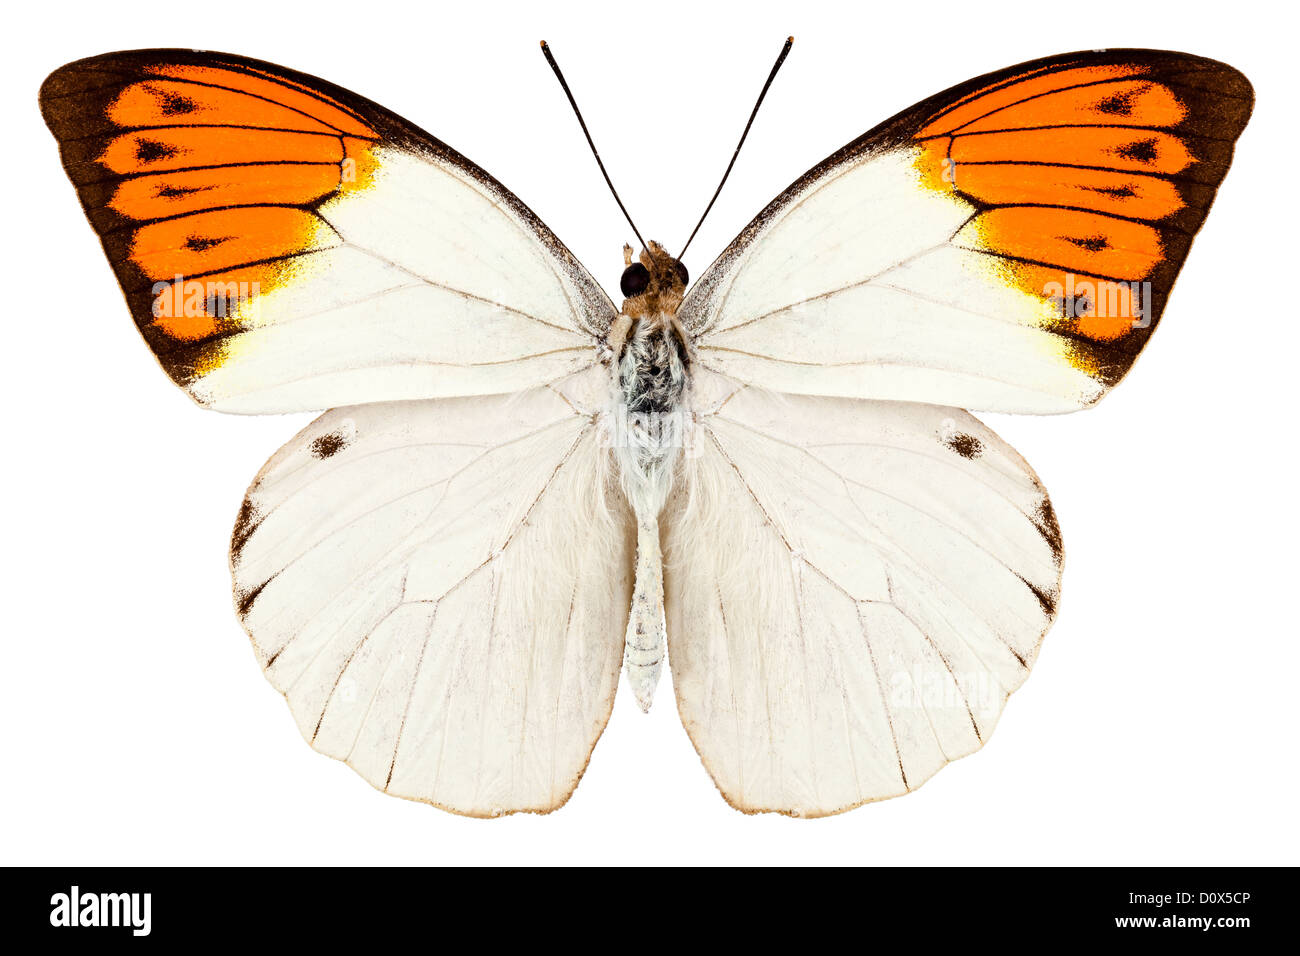 Butterfly species Hebomoia glaucippe 'Great Orange Tip' Stock Photo